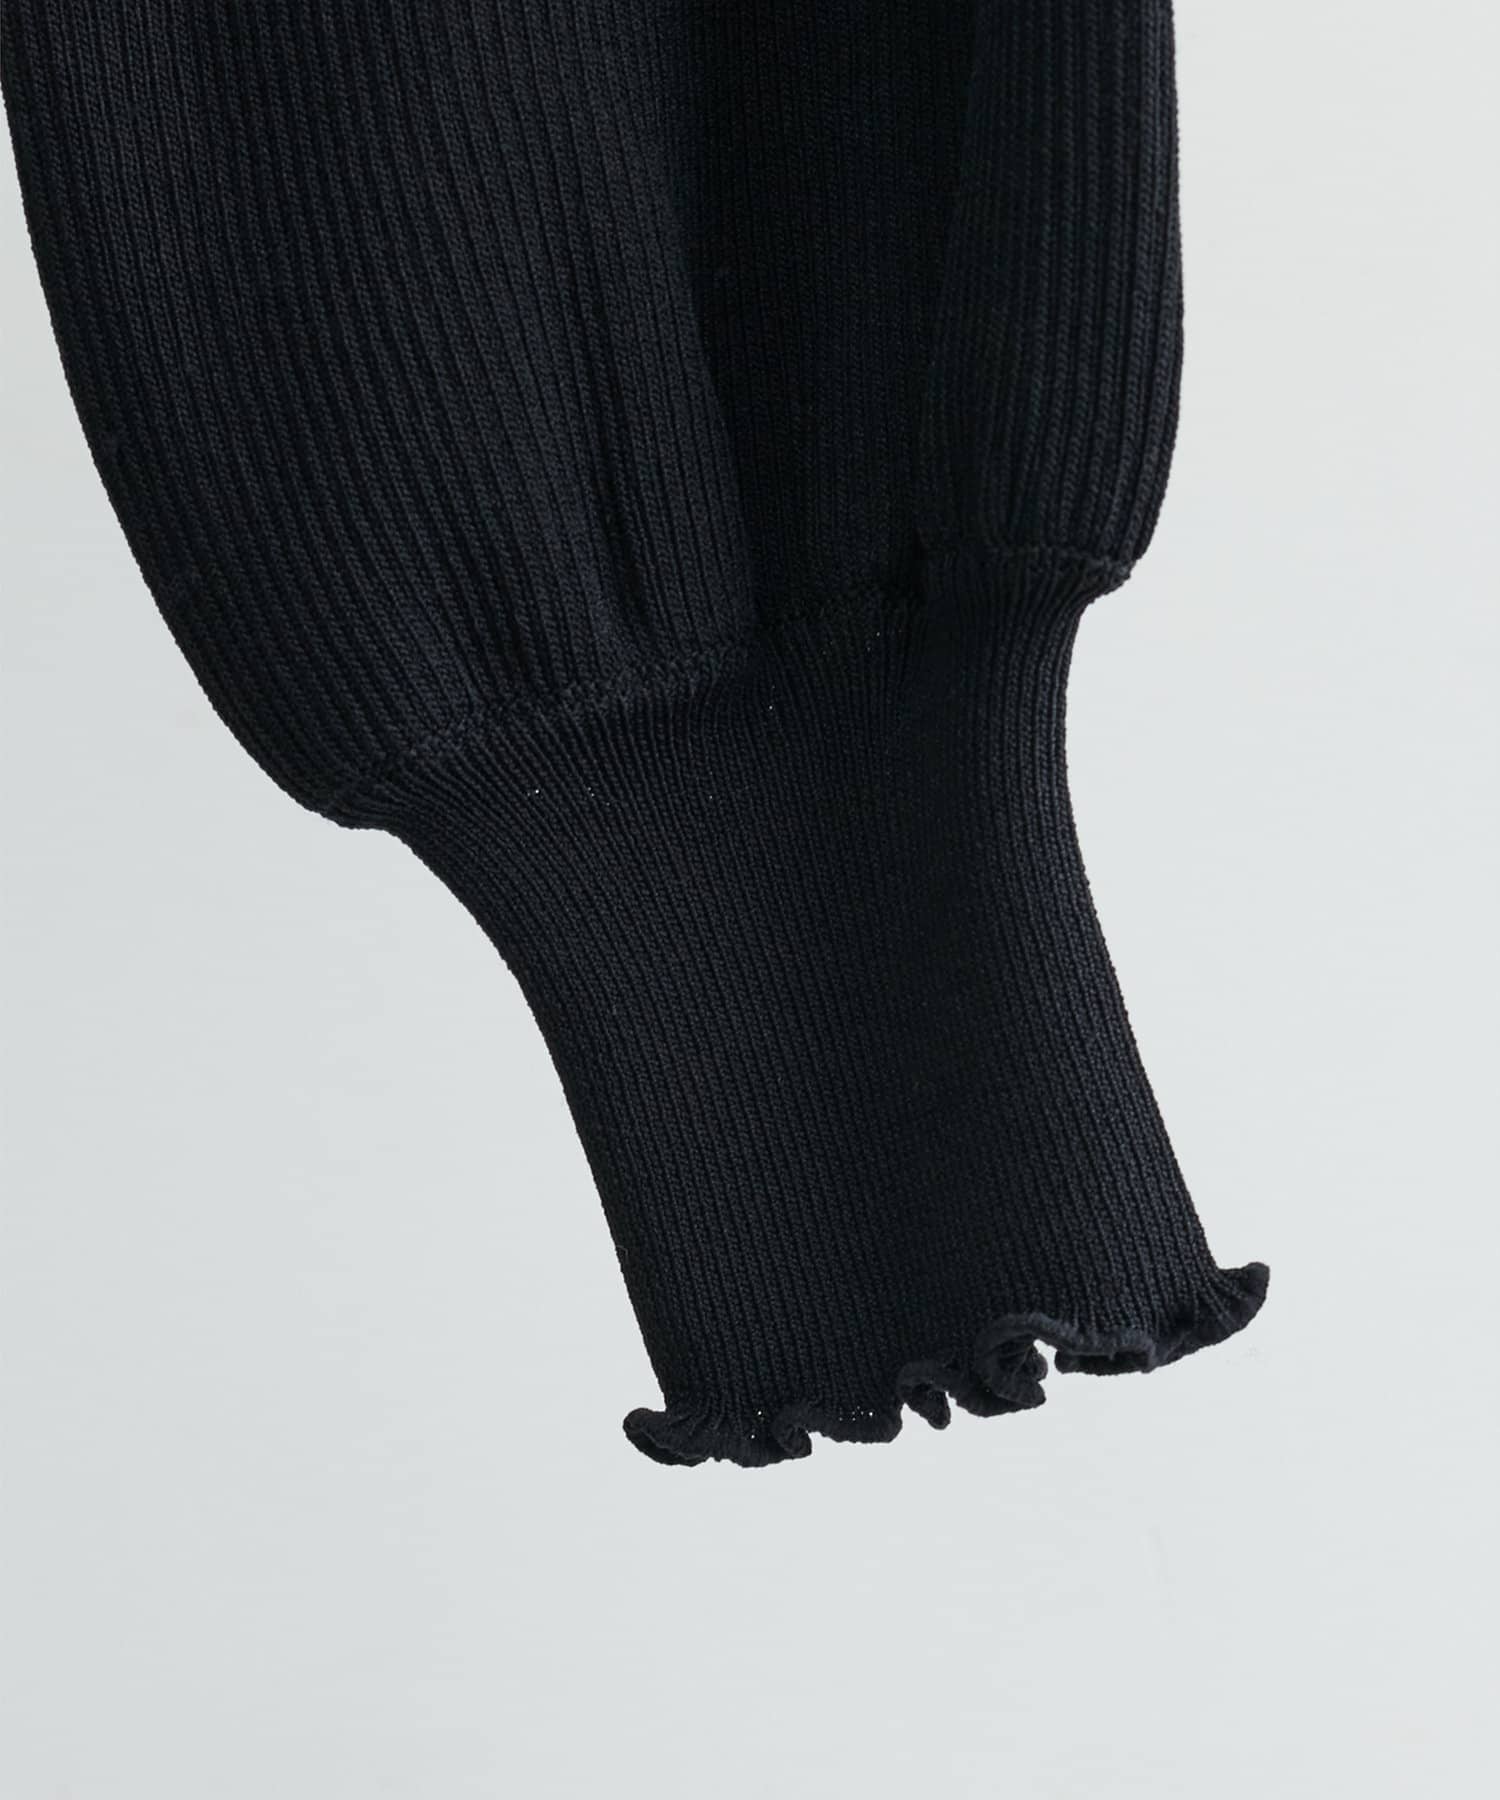 natural couture(ナチュラルクチュール) 袖口メローショート丈リブカーデ